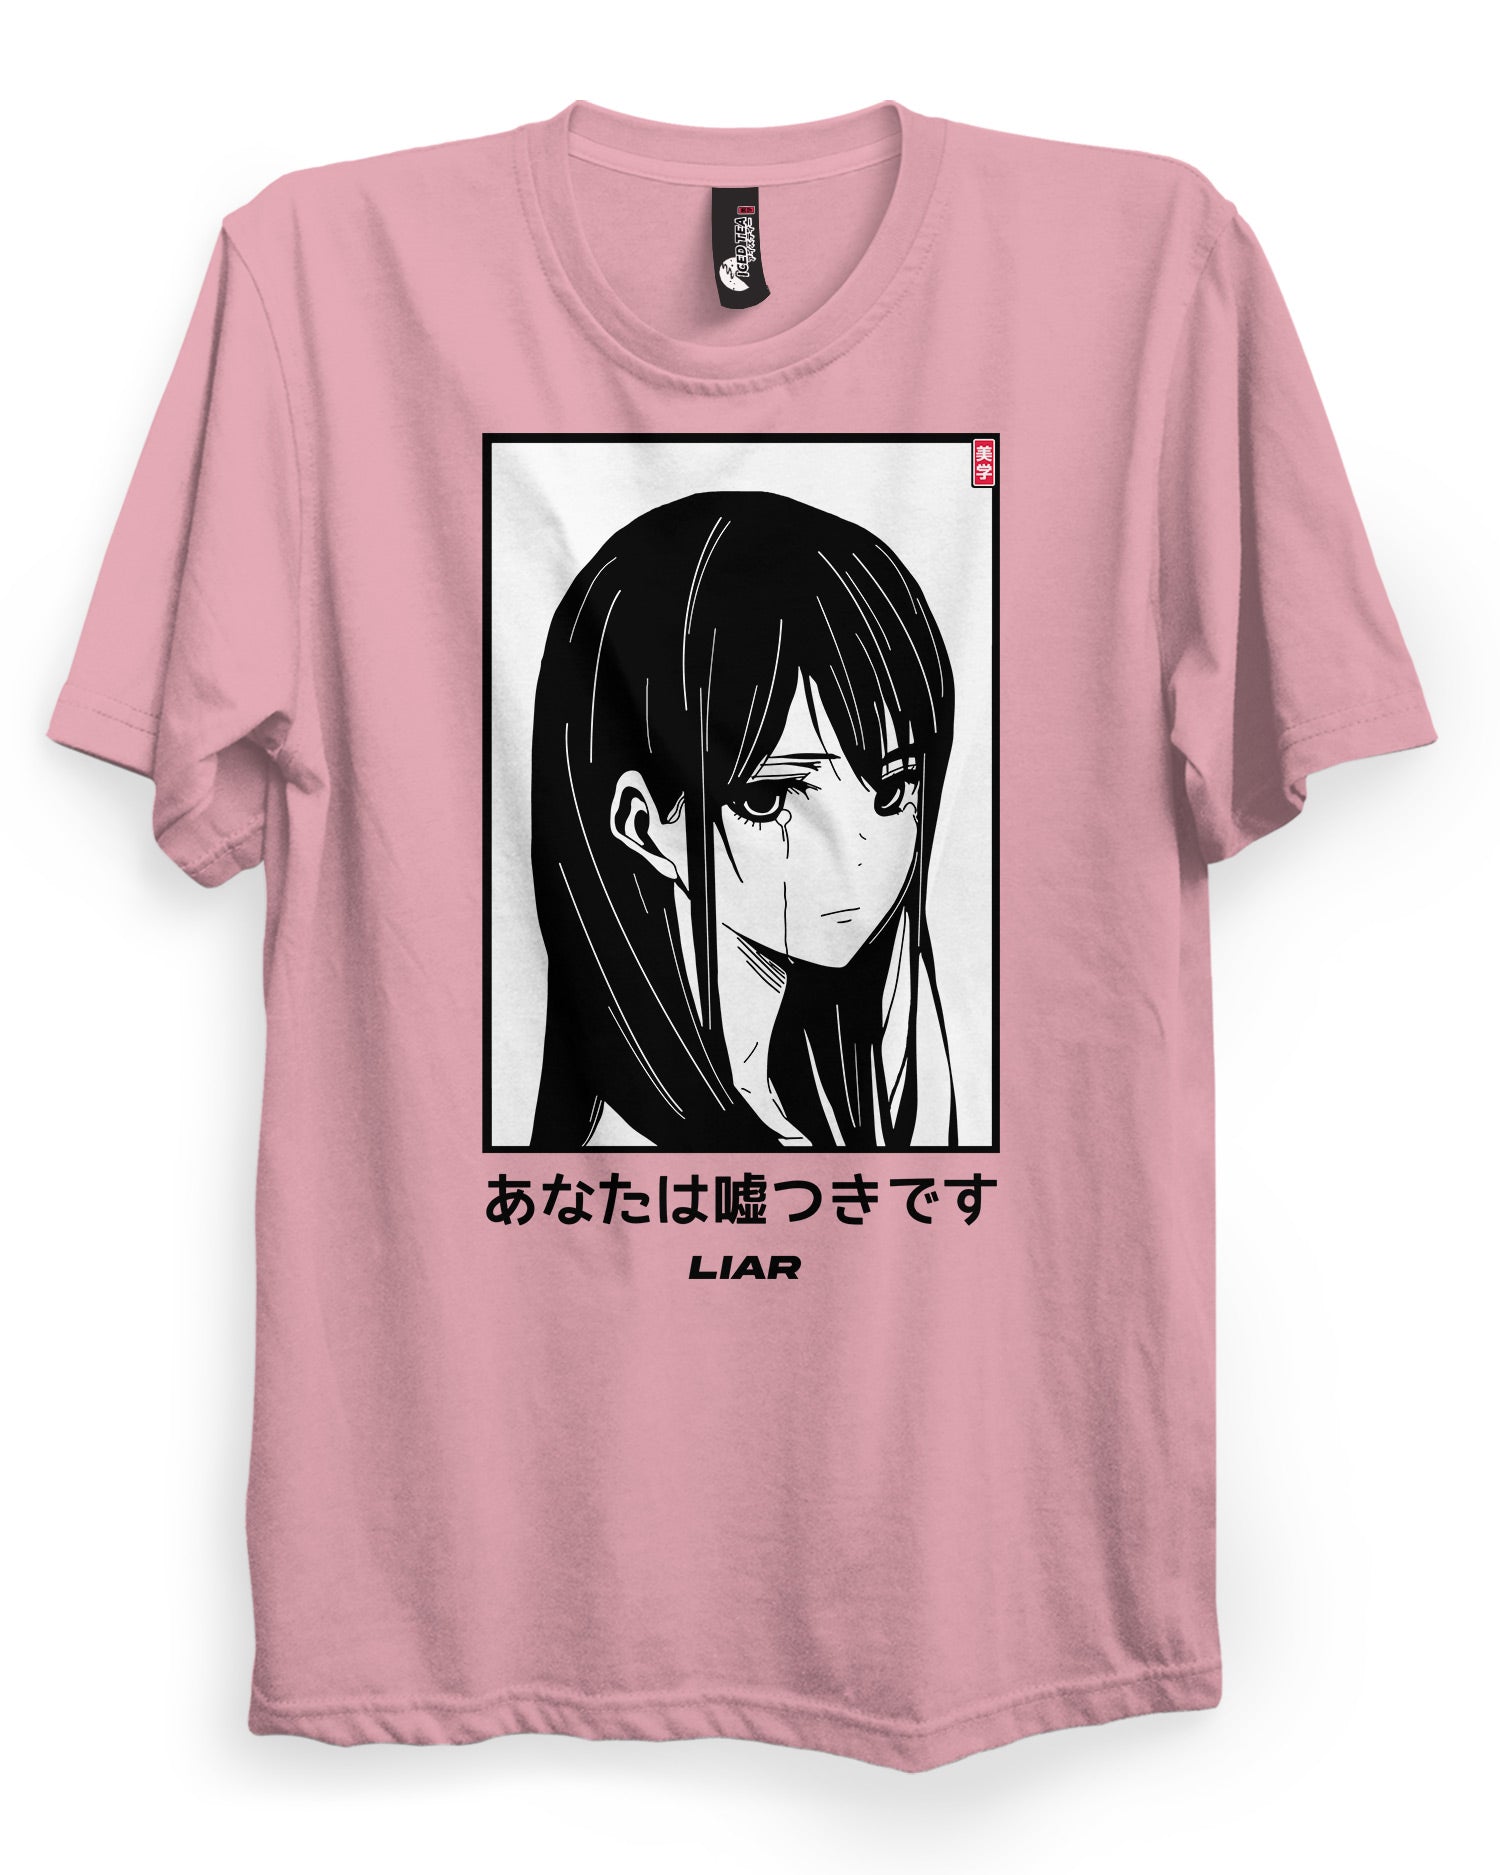 LIAR (うそつき) - Anime T-Shirt - Dark Aesthetics and Anime Clothing Streetwear